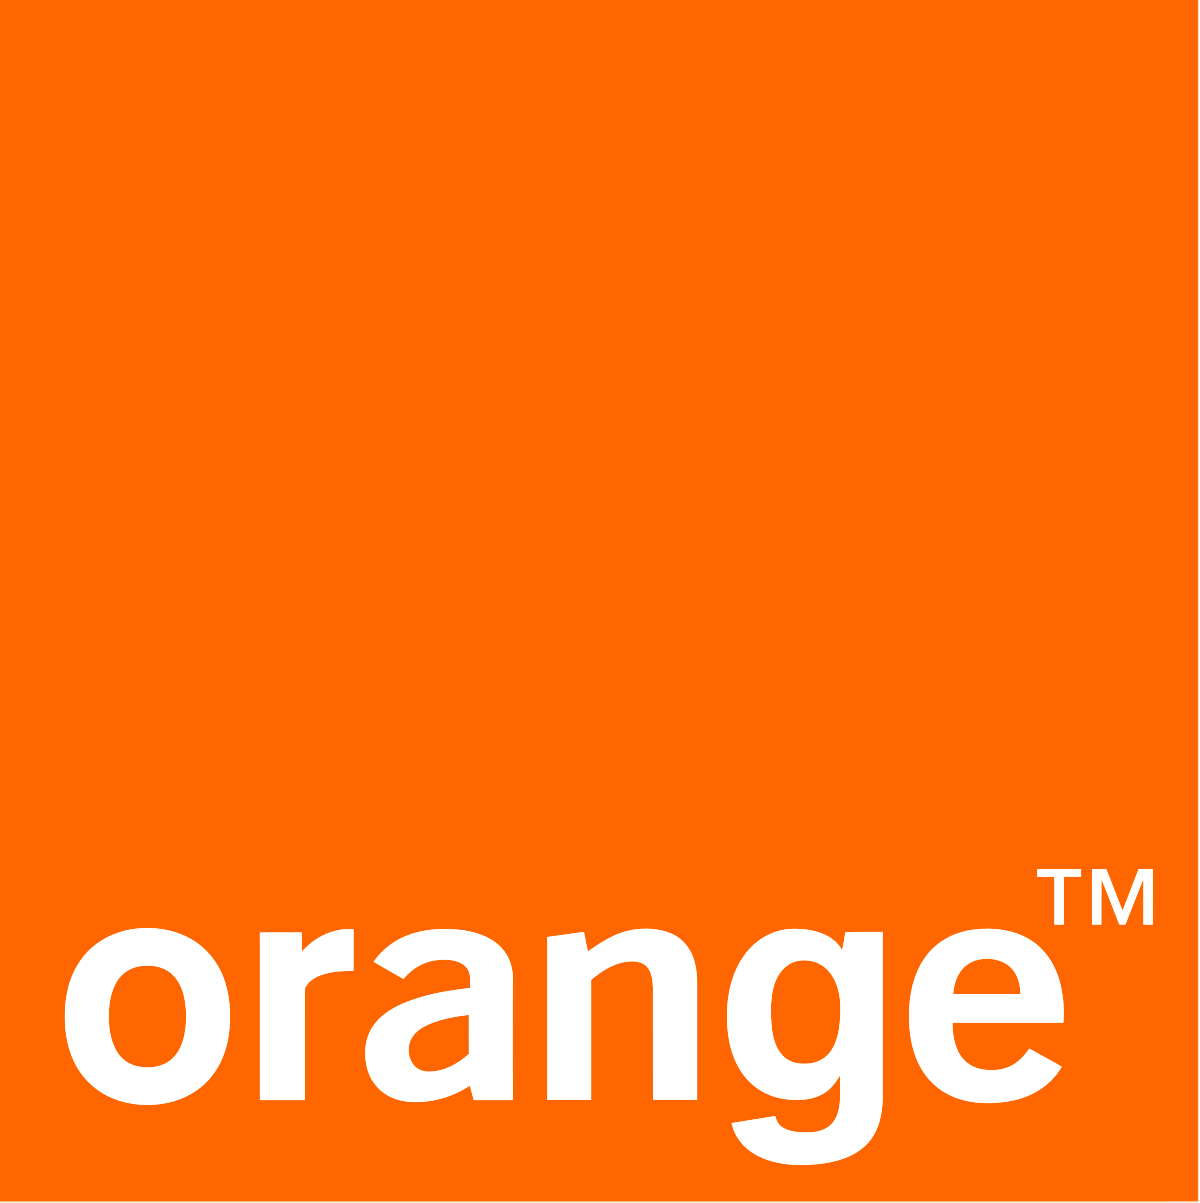 Orange Money logo